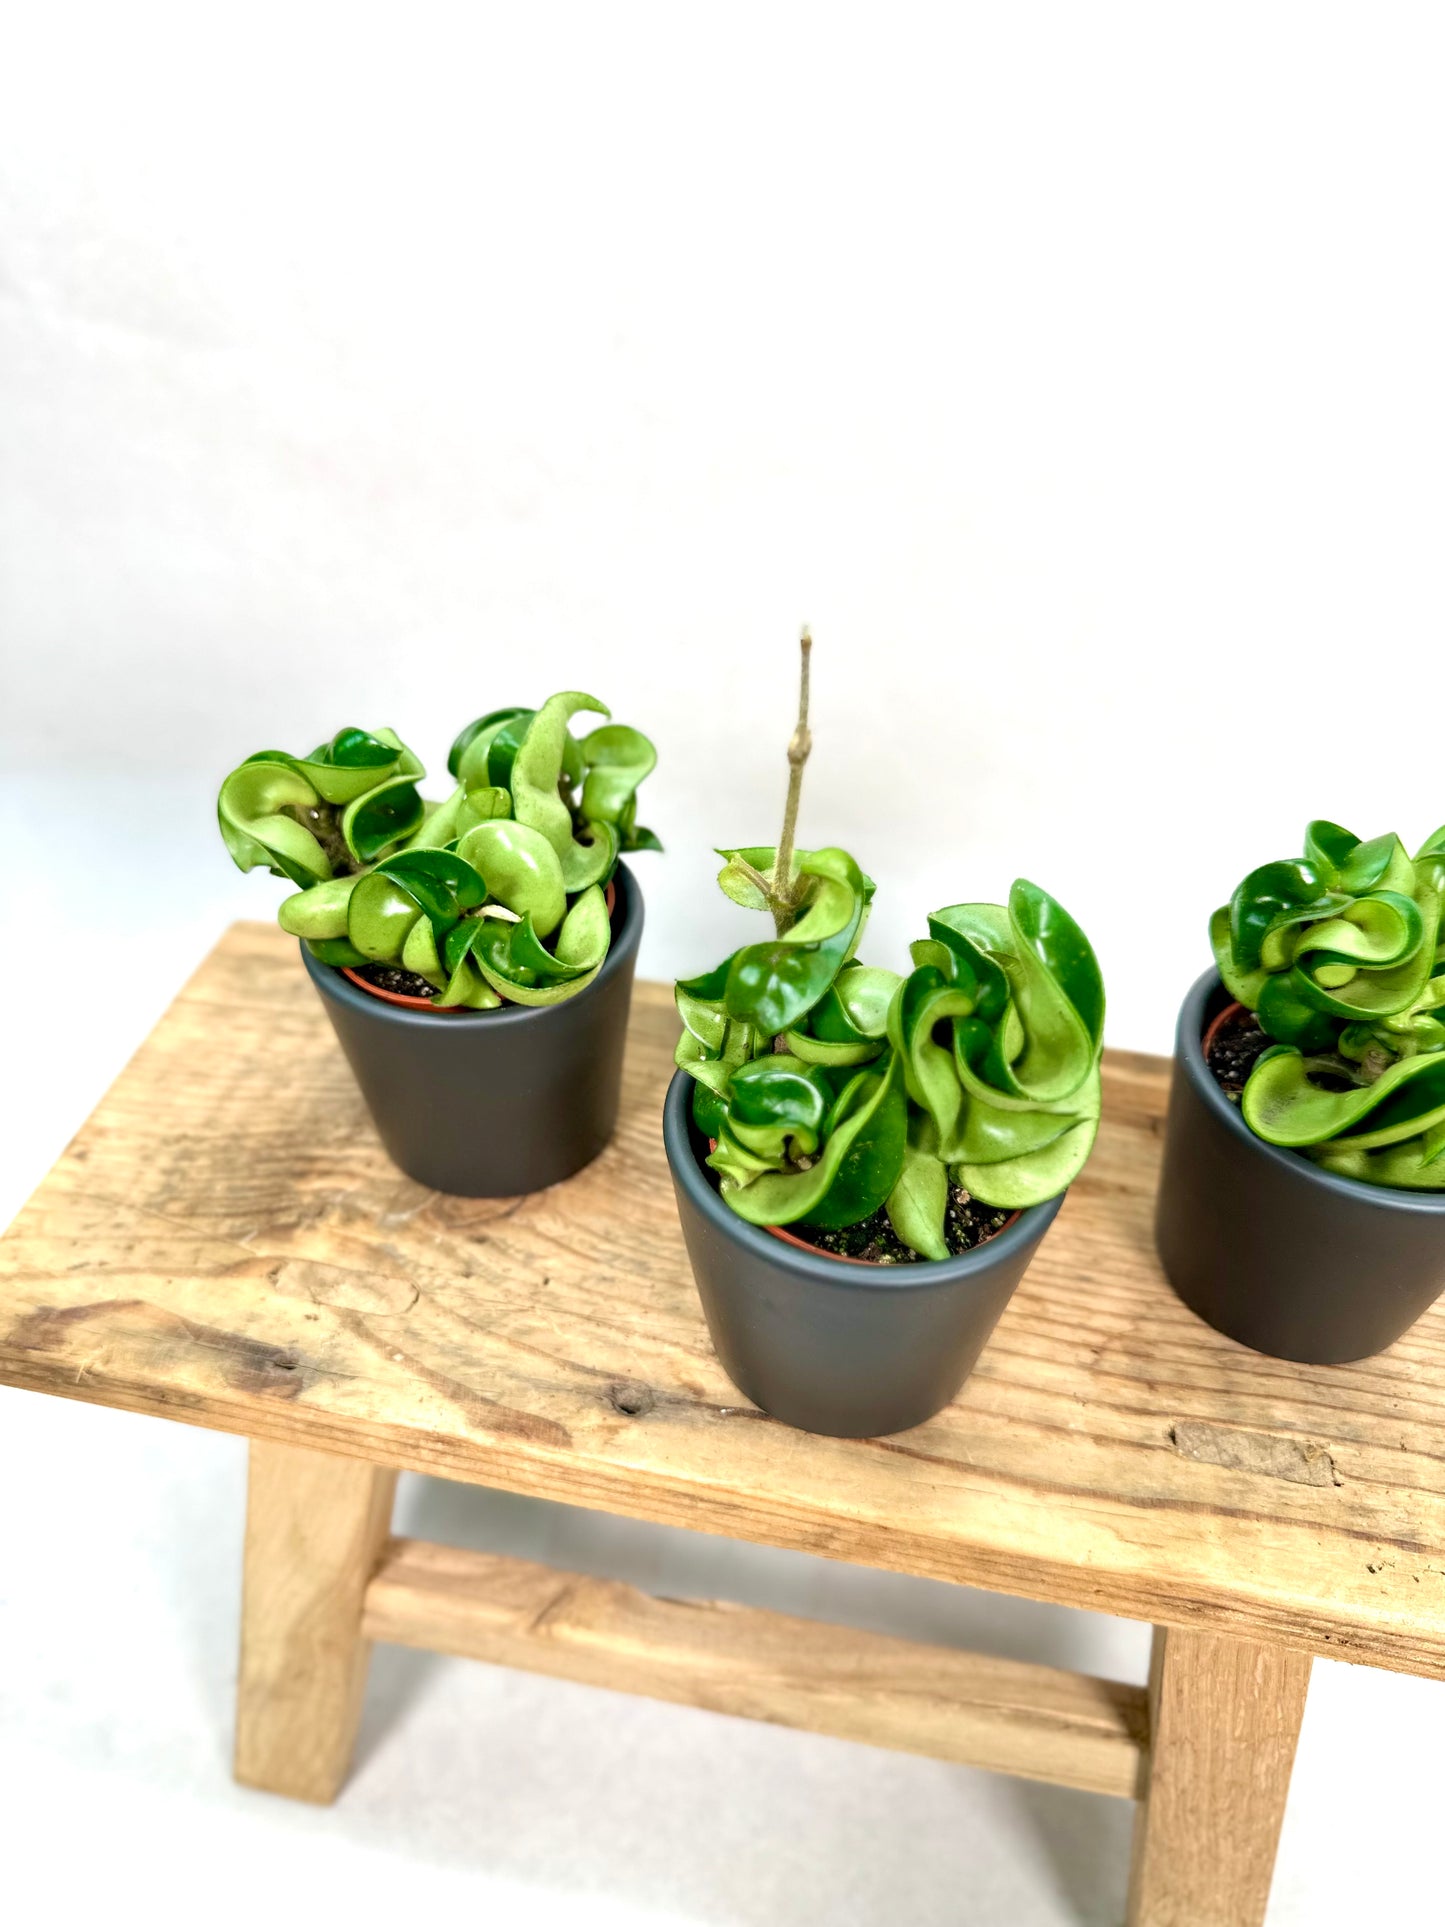 Hoya Carnosa Compacta Green - Baby plant